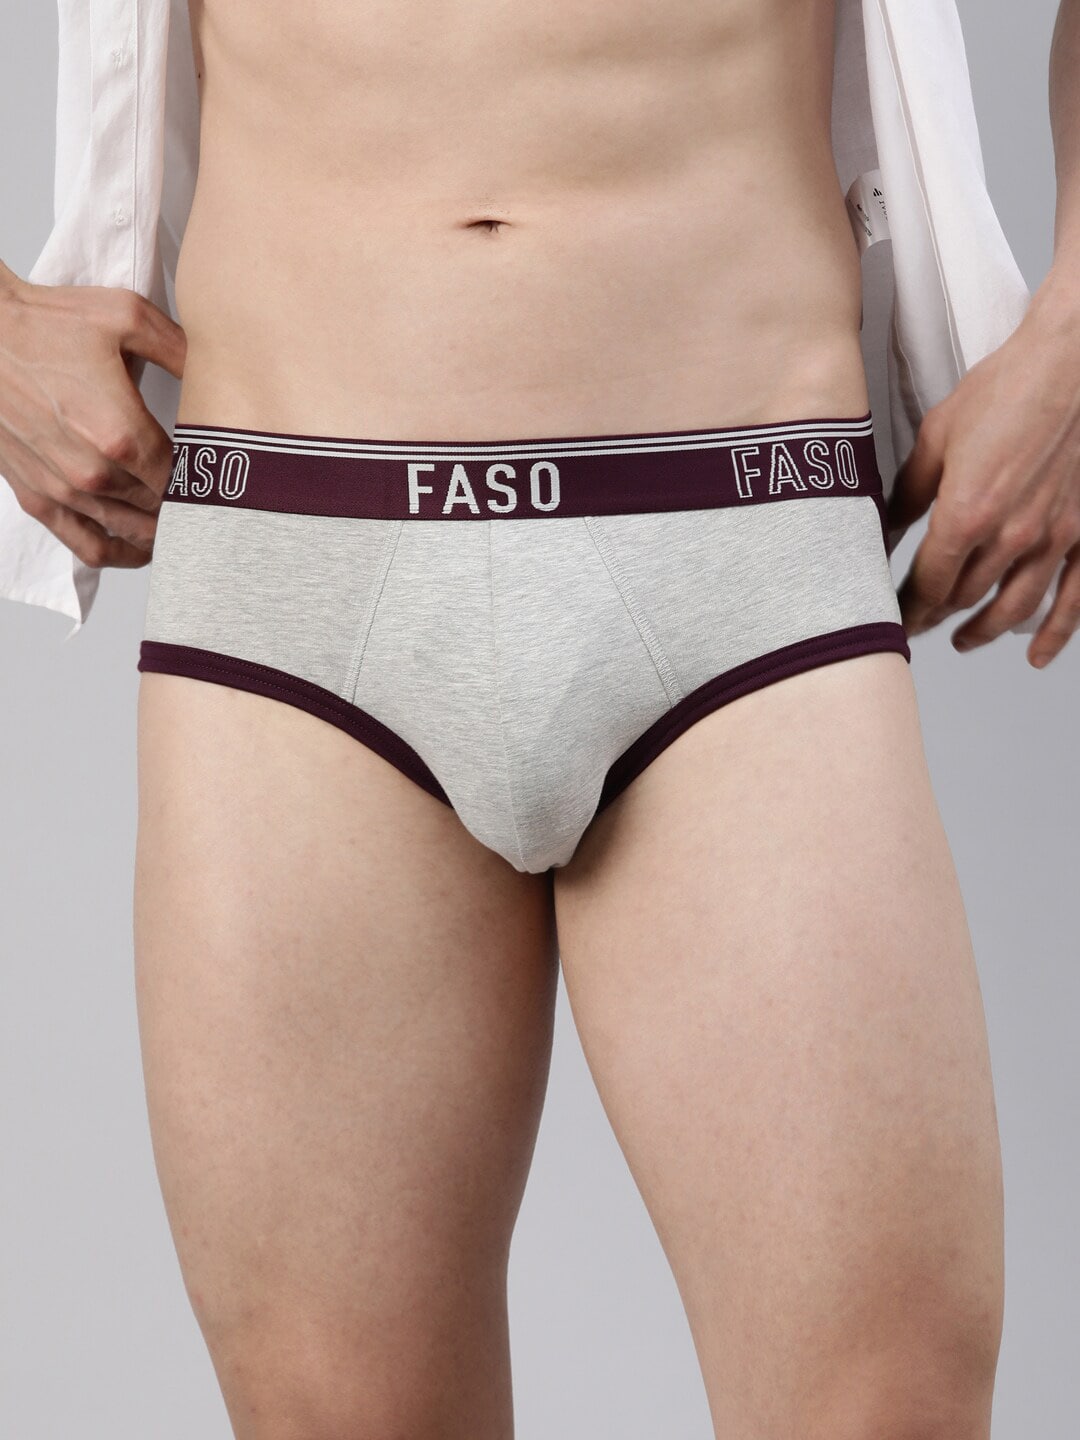 Buy F A S O FASO Men Colourblocked Pure Cotton Basic Briefs at Redfynd